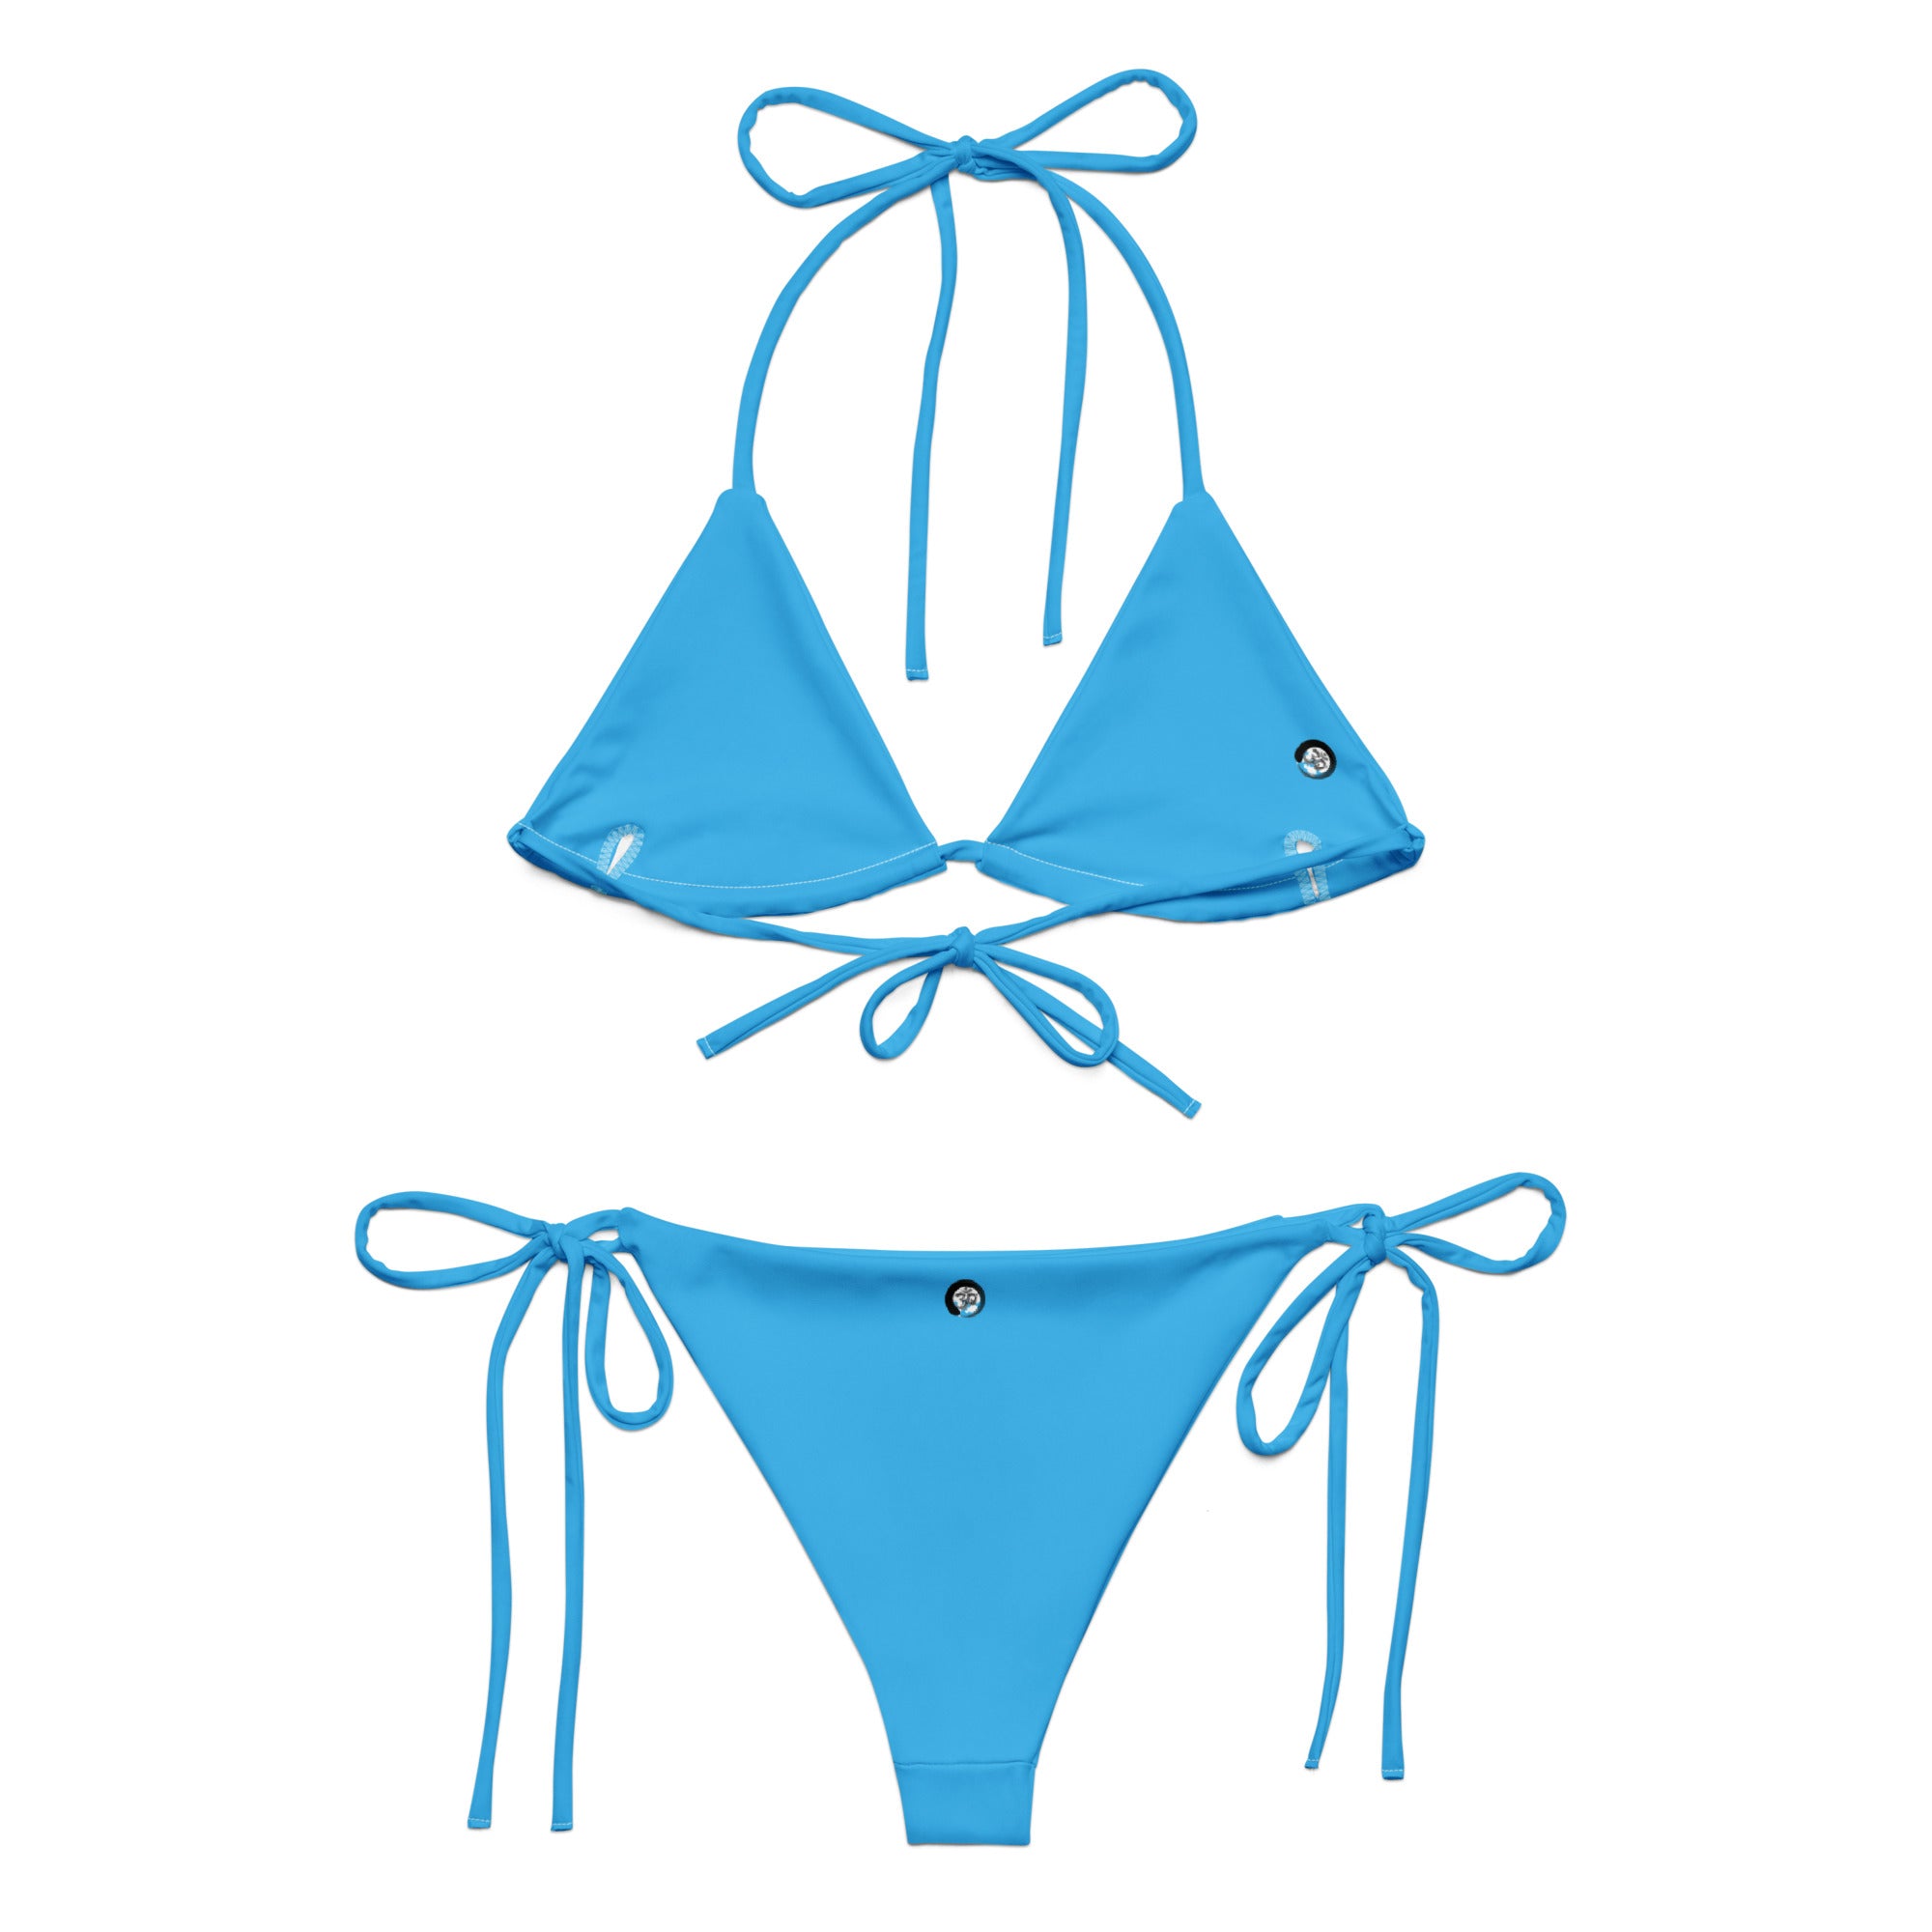 I'm Expensive IX Recycled String Bikini - Azure